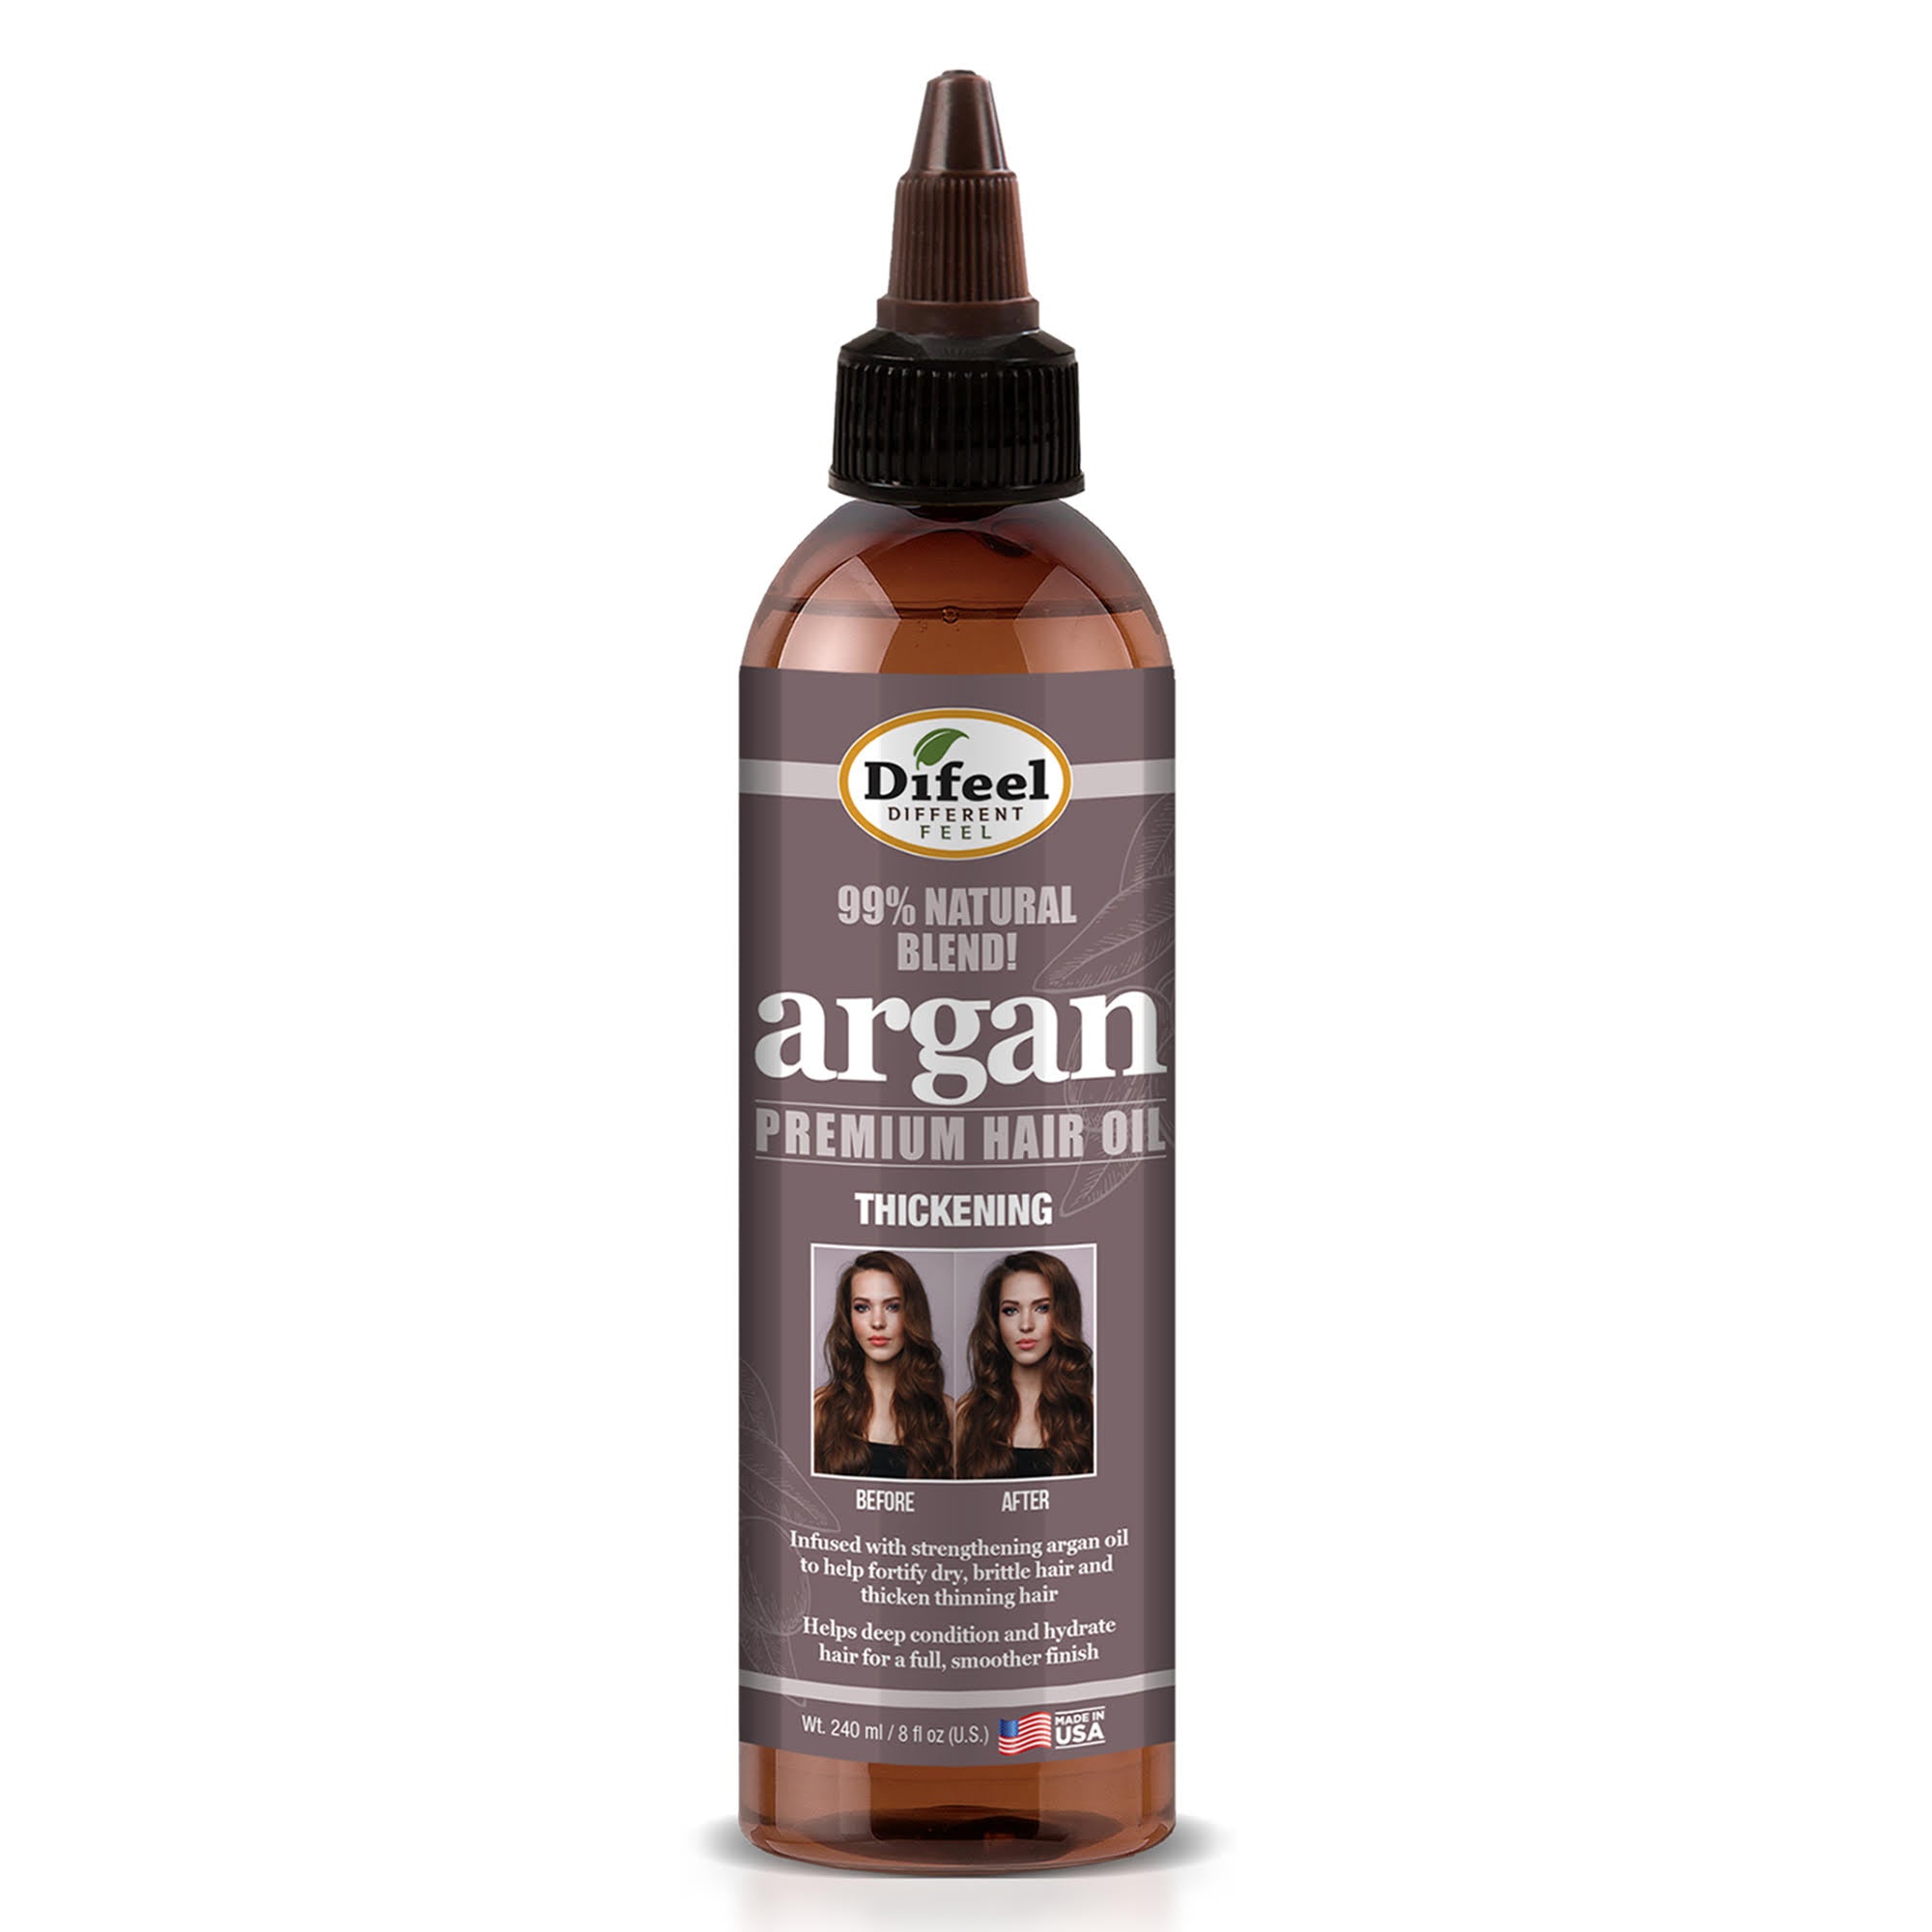 Difeel 99% Premium Natural Hair Oil Blend- Thickening with Argan Oil 8 oz.